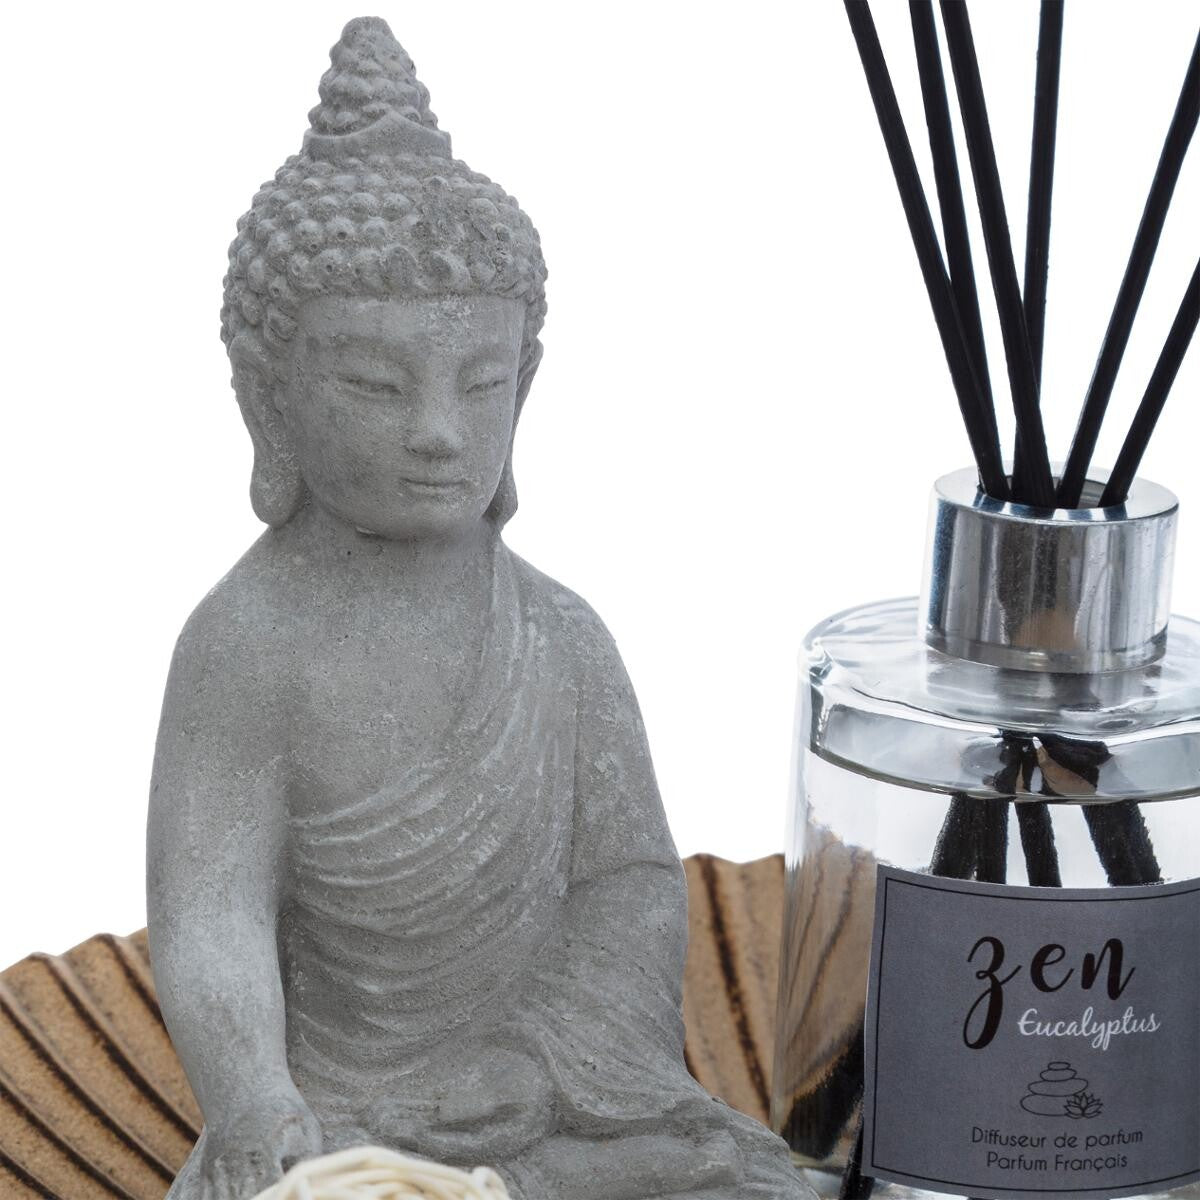  Zen gift set - perfume box